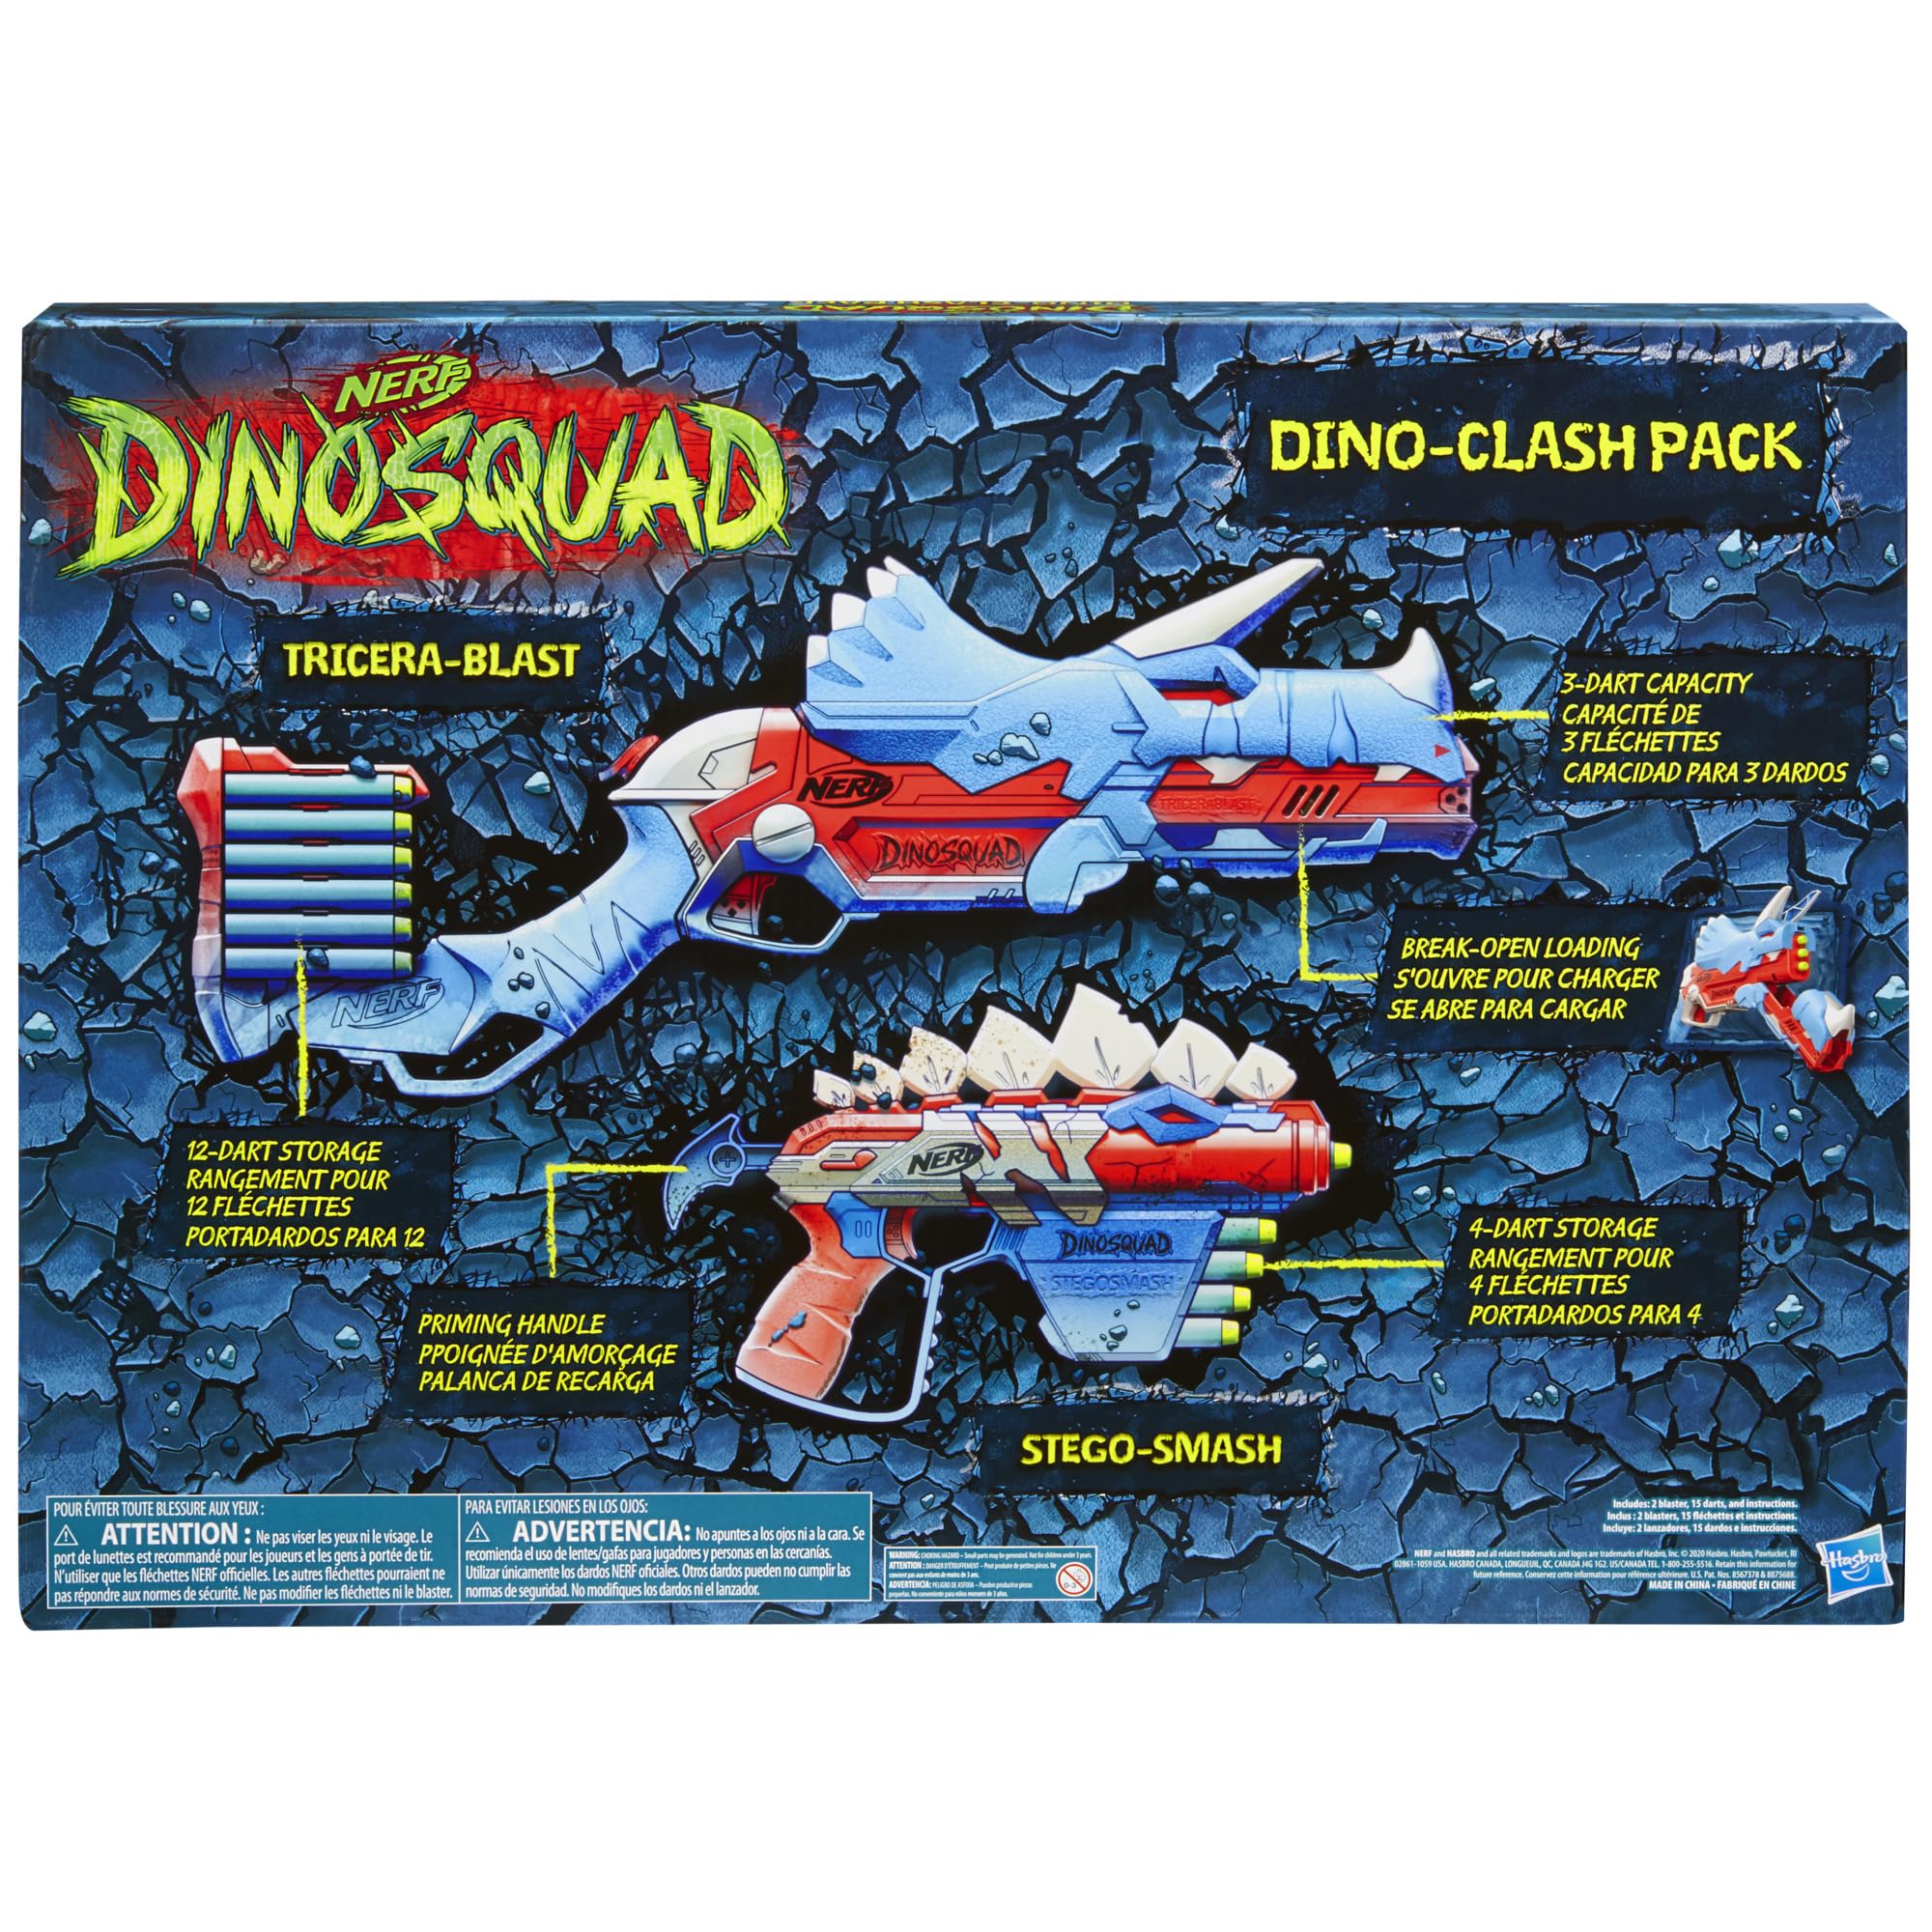 NERF DinoSquad Dino-Clash Pack, Includes 2 Blasters, 15 Elite Darts, Dart Storage, Triceratops and Stegosaurus Dinosaur Designs